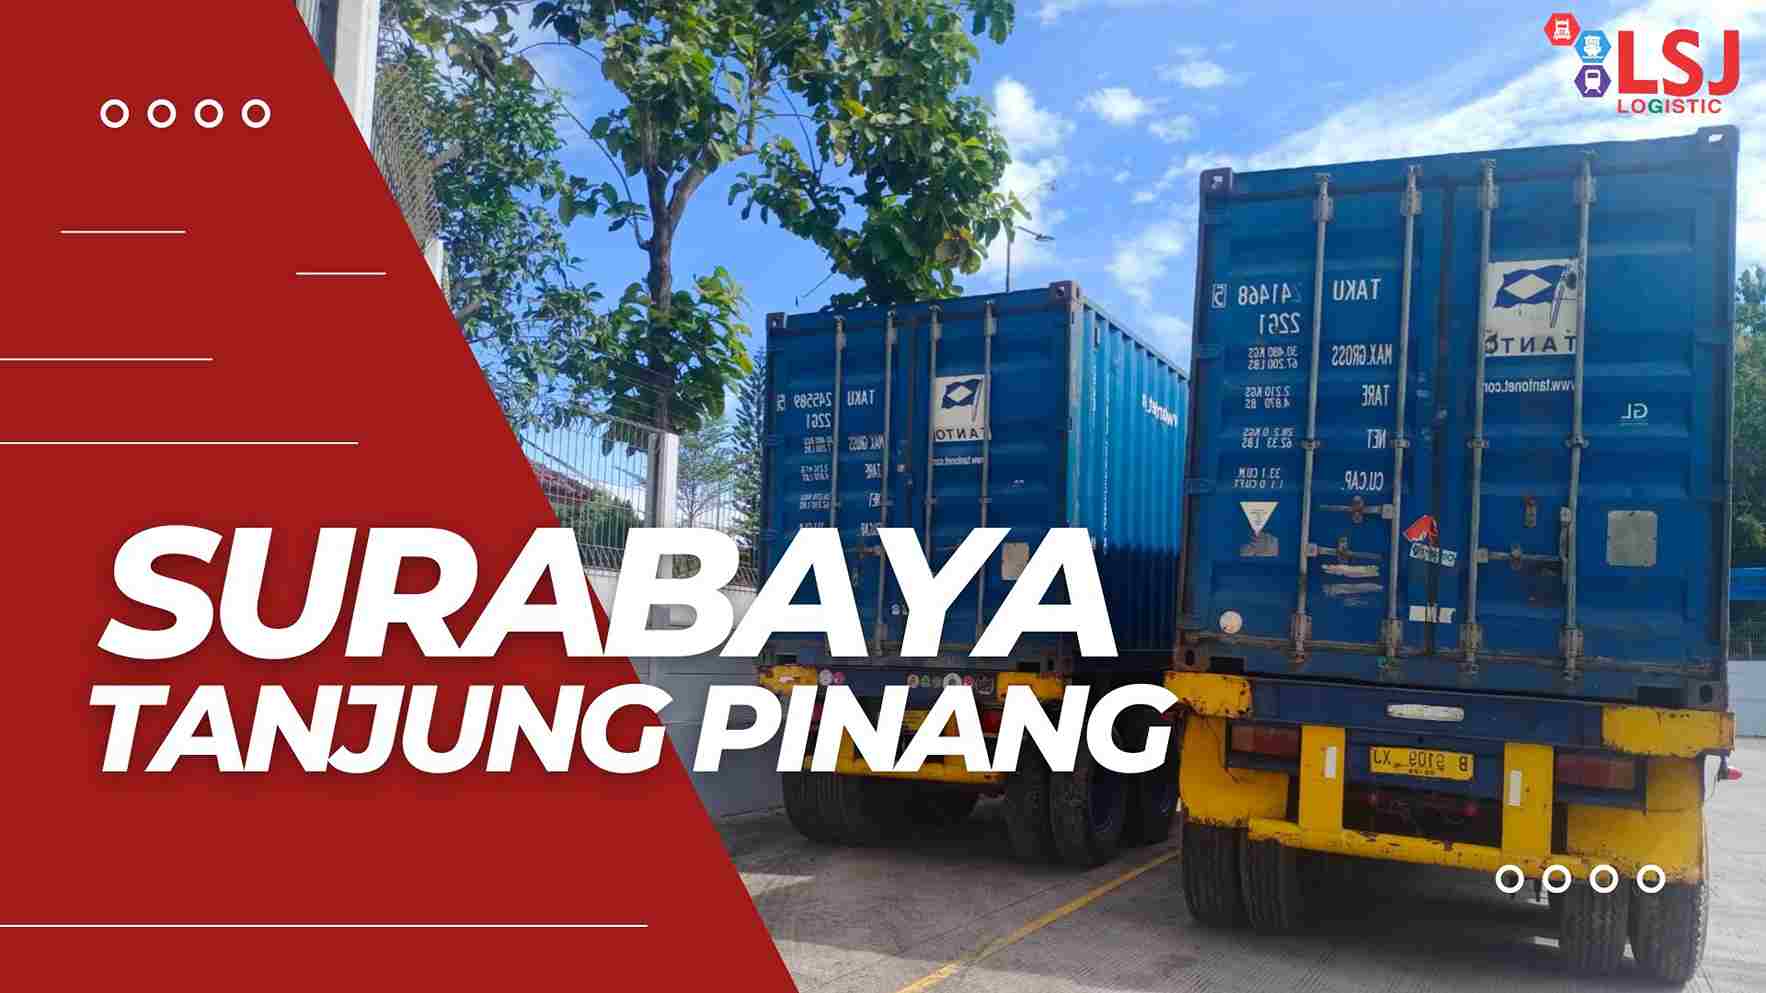 Ekspedisi Via Container Surabaya Tanjung Pinang